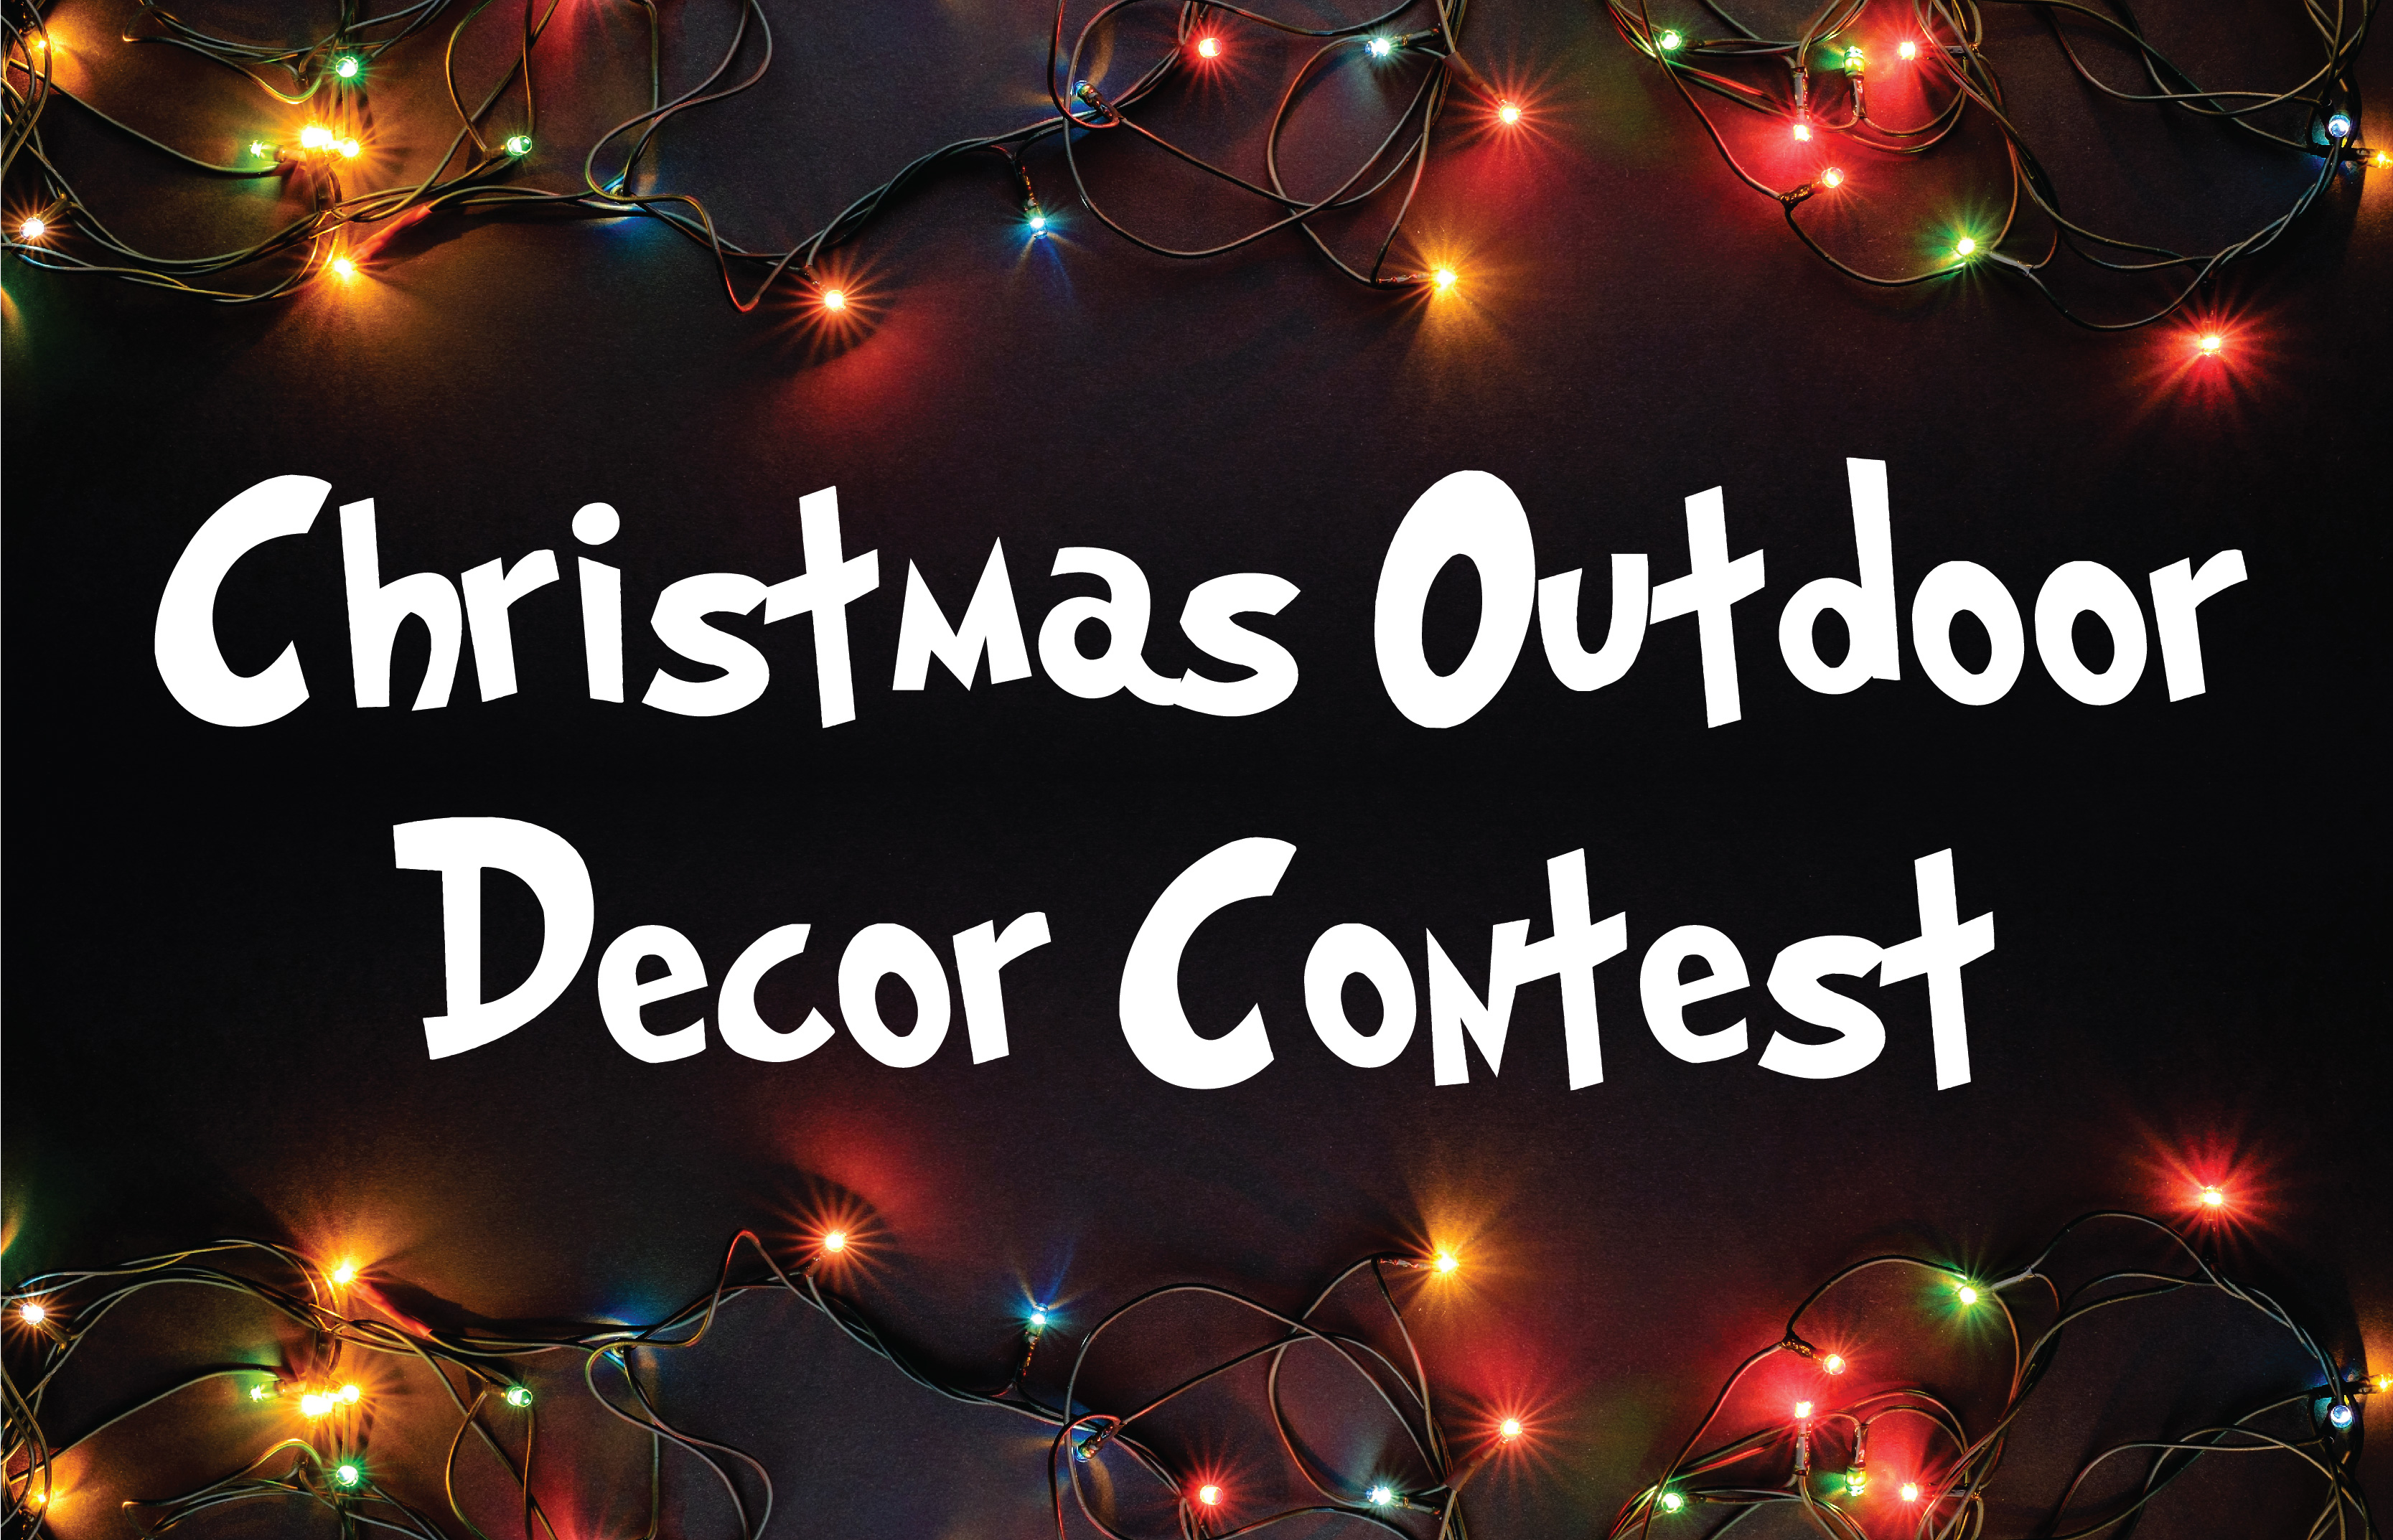 Copper Village Announces Christmas Outdoor Decor Contest